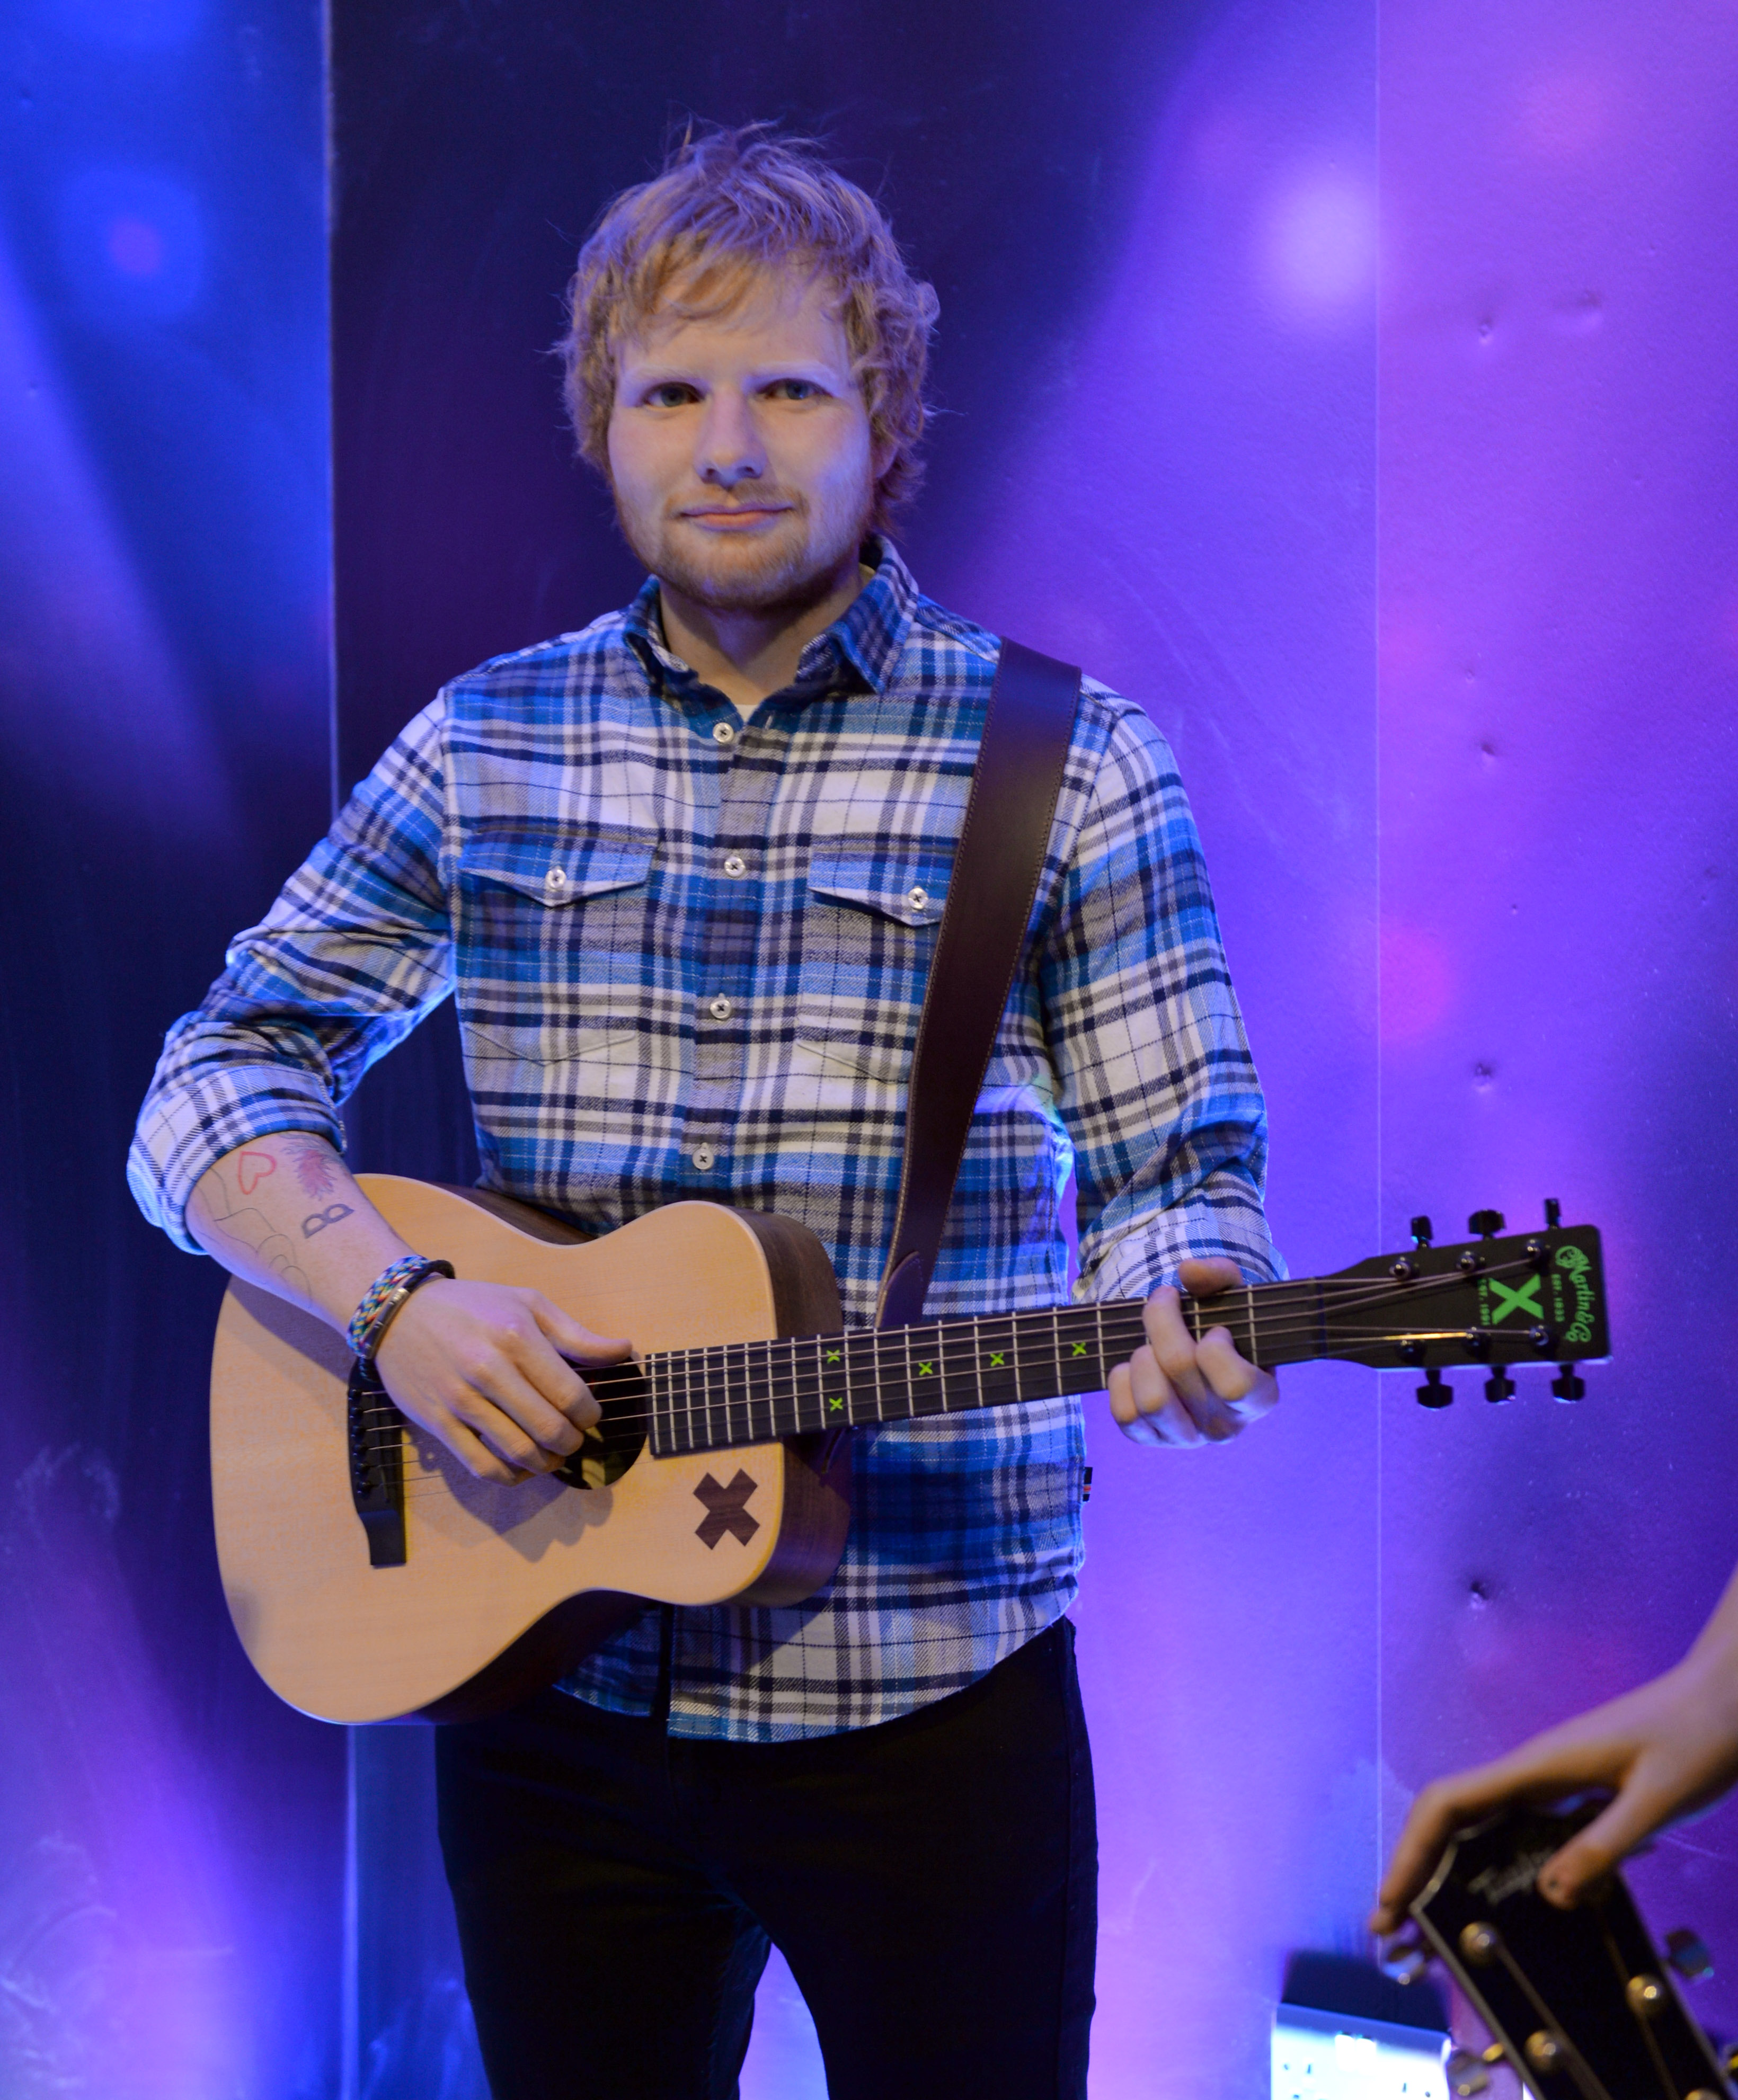 Ed Sheeran's wax figure at Madame Tussauds Blackpool